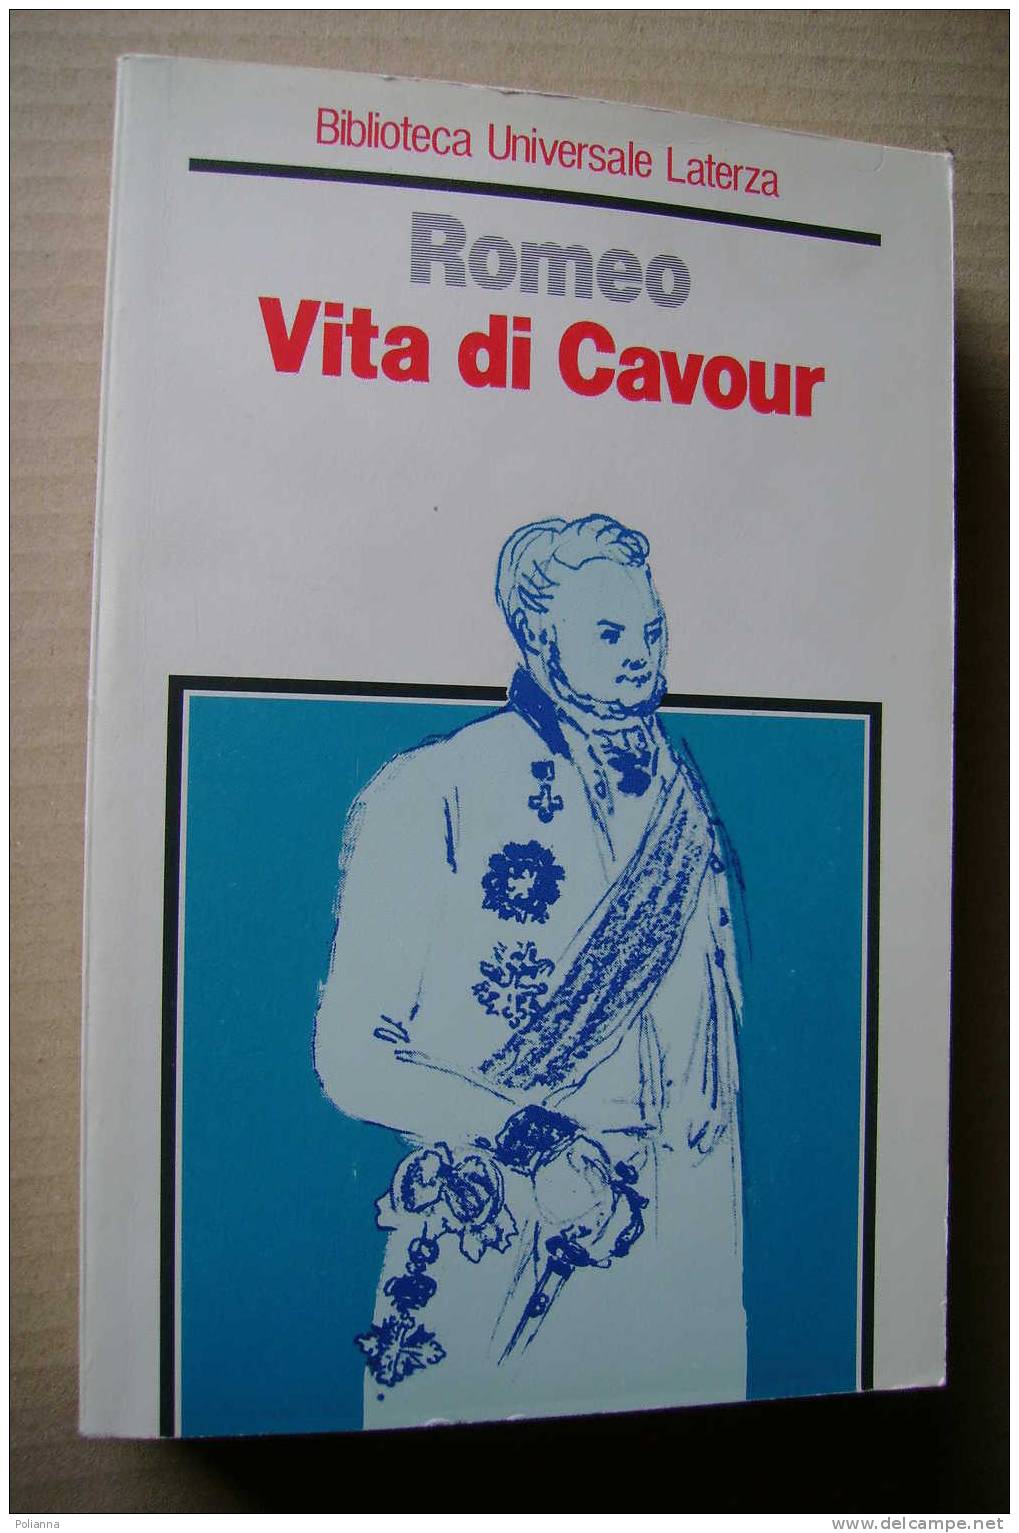 PDQ/28 Romeo VITA DI CAVOUR B.U.Laterza 1995/RISORGIMENTO - History, Biography, Philosophy